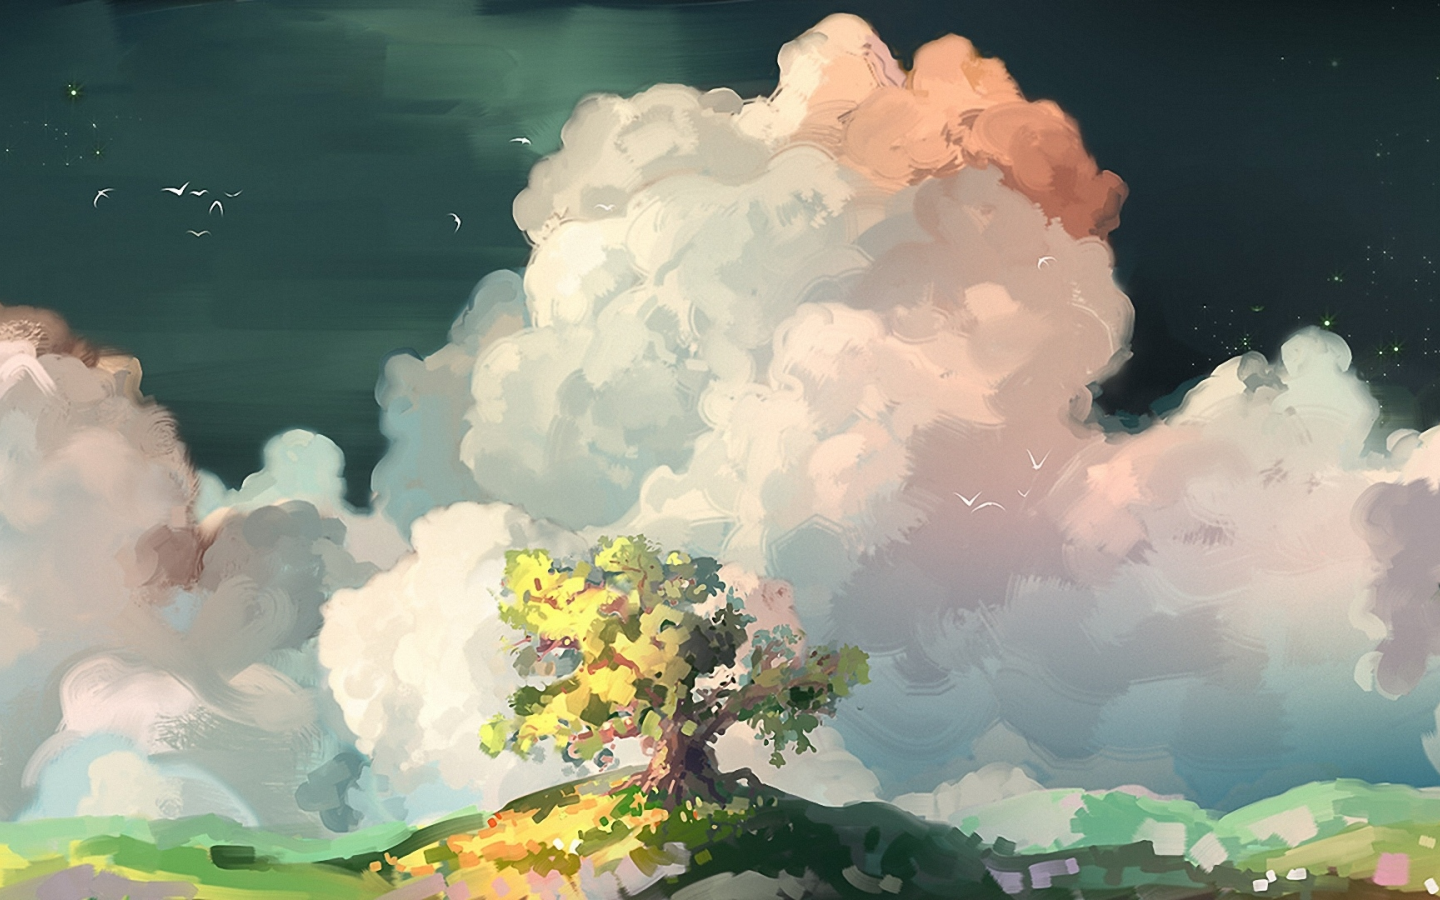 дерево, облака, нарисованный пейзаж, арт, птицы